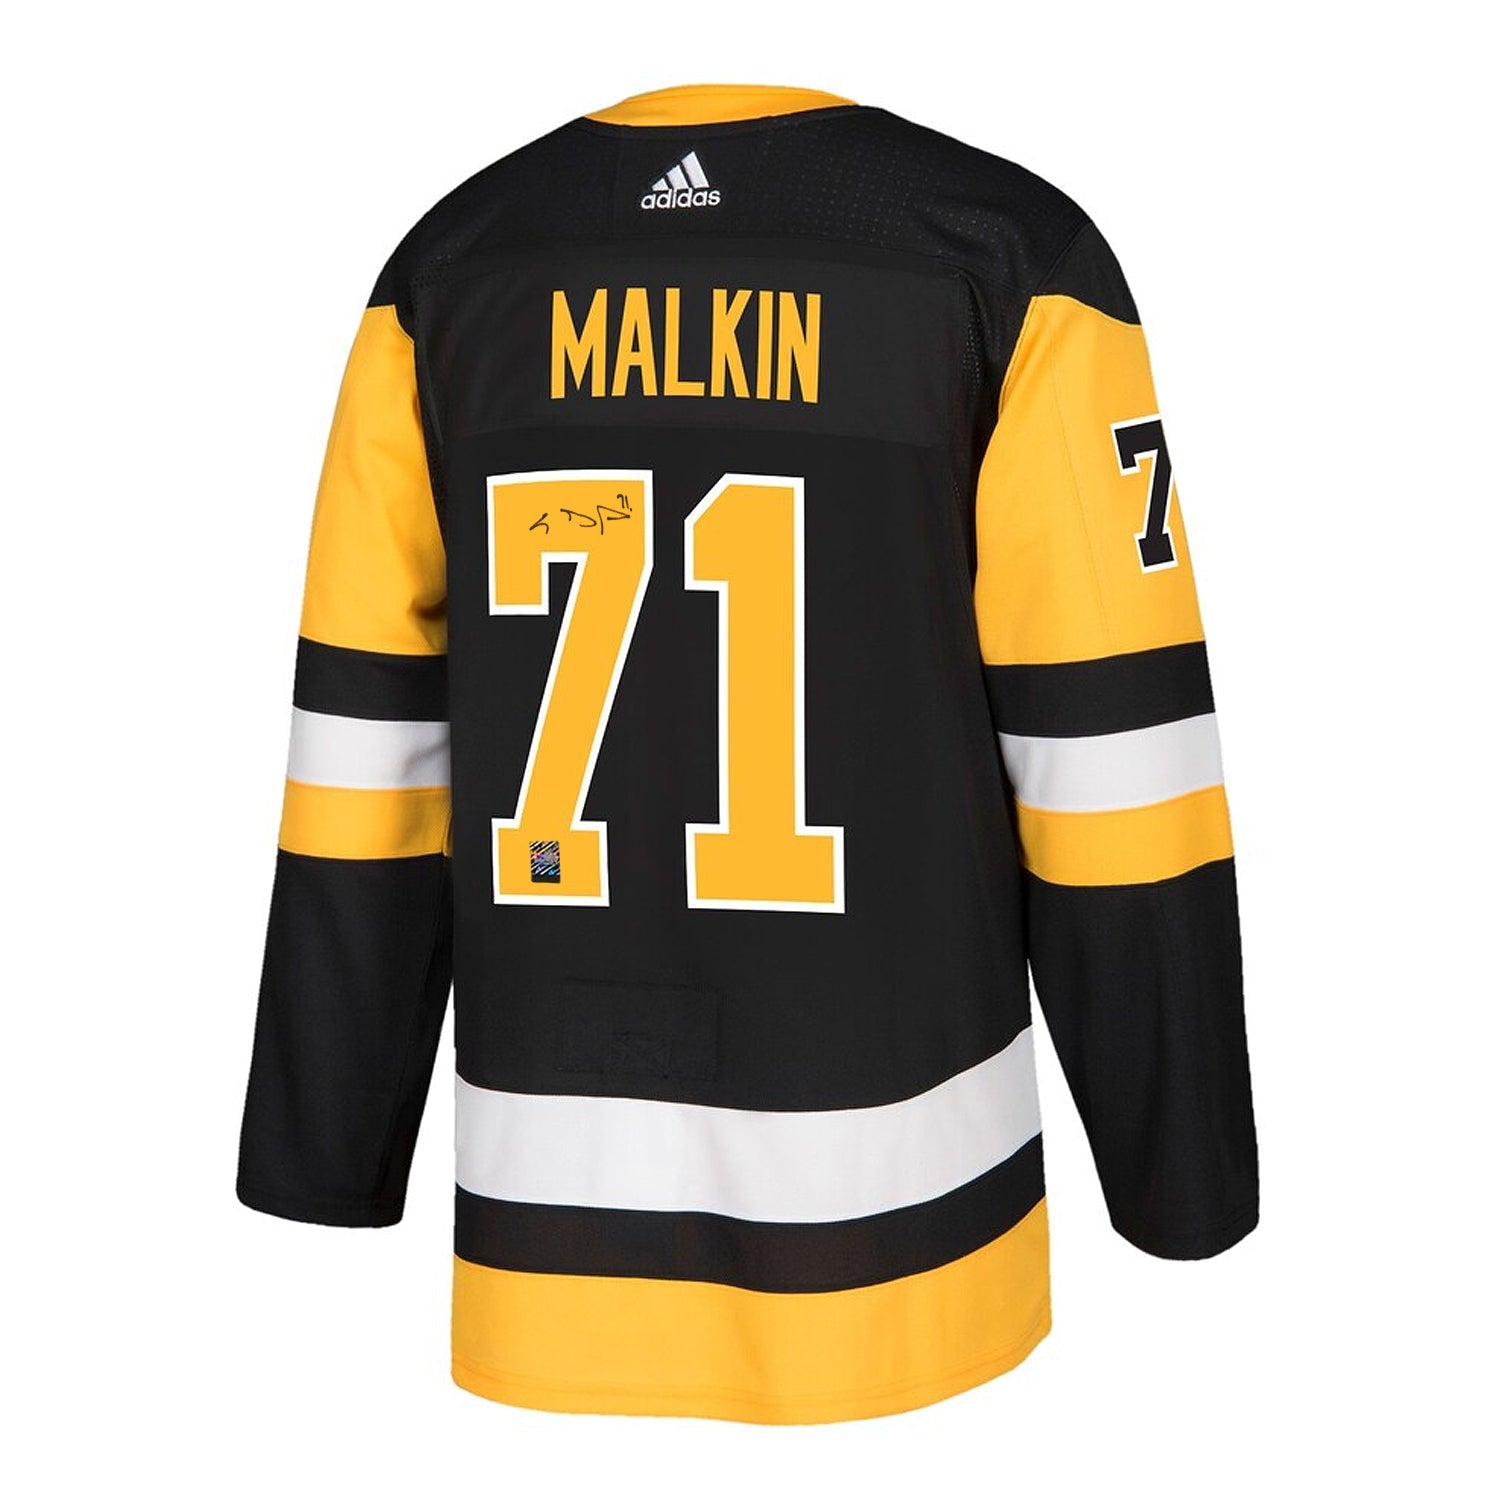 Evgeni Malkin Signed Pittsburgh Penguins Adidas Pro Jersey